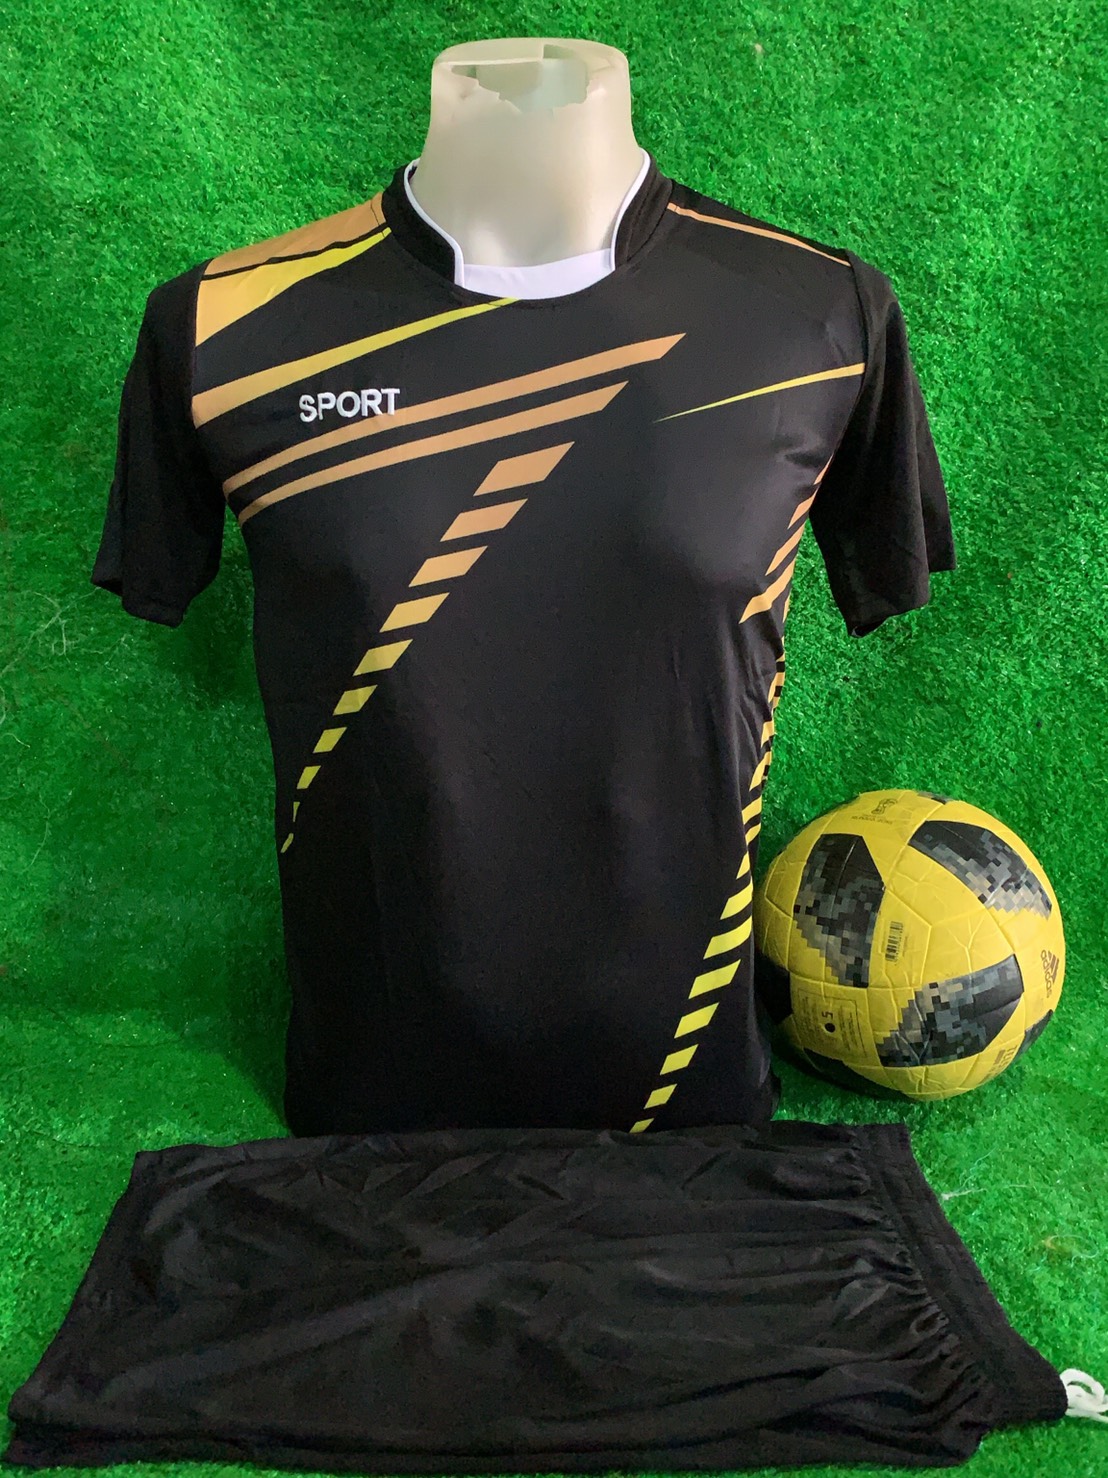 very cheap oneชุดฟุตบอล sport cloth Football kitชุดกีฬาสี ชุดกีฬา ชุด sport cloth Football มีหลายสี size M L XL ลายเสื้ออาจไม่ตรงตามรูป แต่สีได้ตามสั่งลายเปลี่ยนใหม่ตลอด